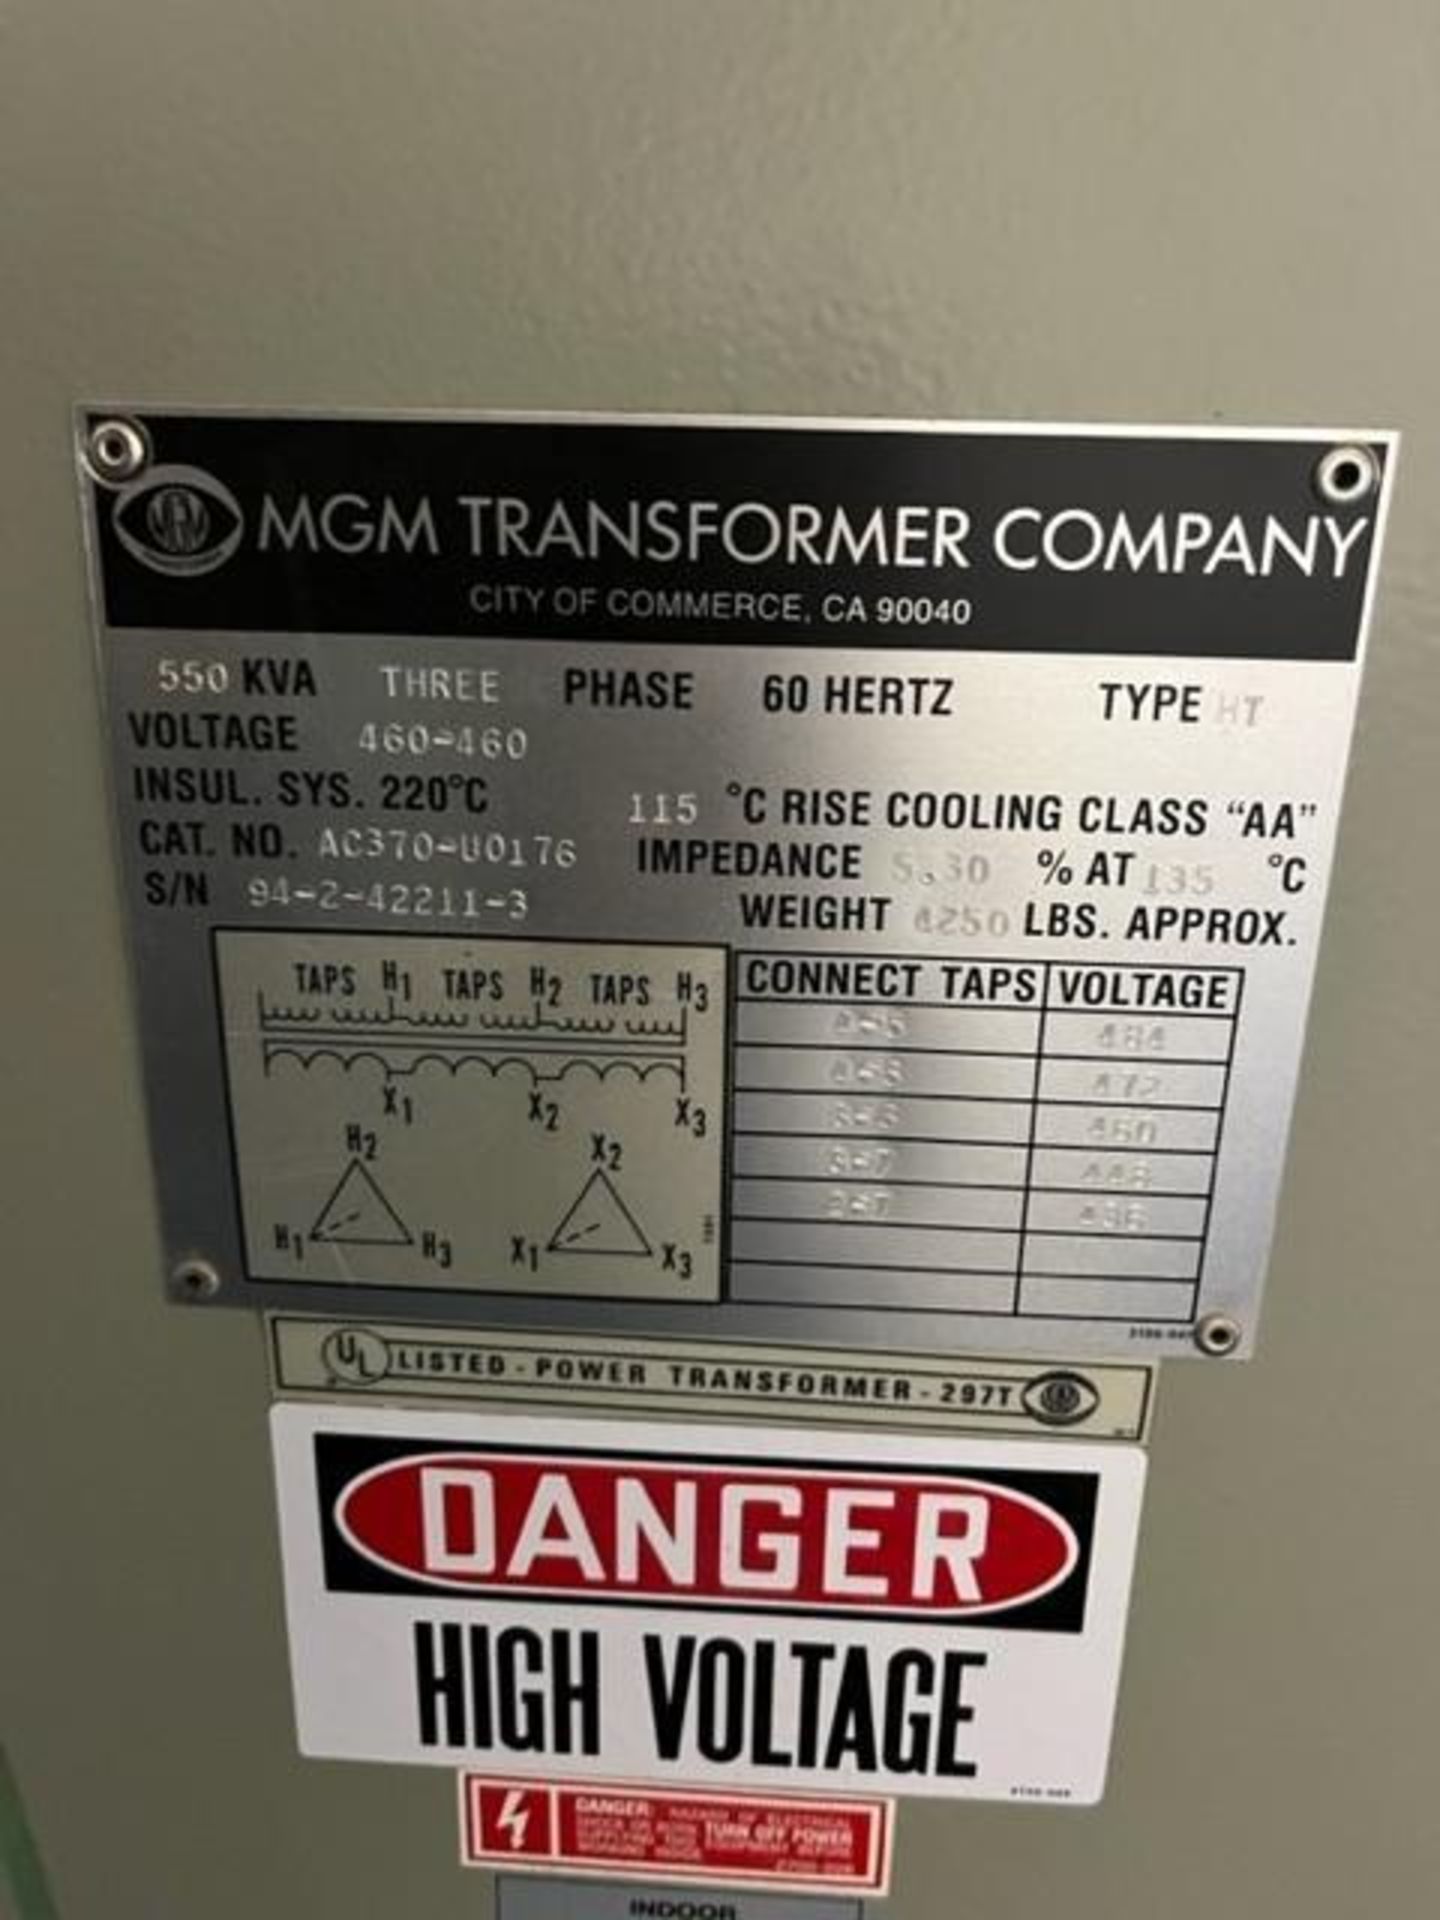 MGM 550 KVA Transformer, Type HT, 3-Pole, 460-460V, 3PH/60 Hz Grafikontrol CRB Ribbon Motor Control - Image 4 of 4